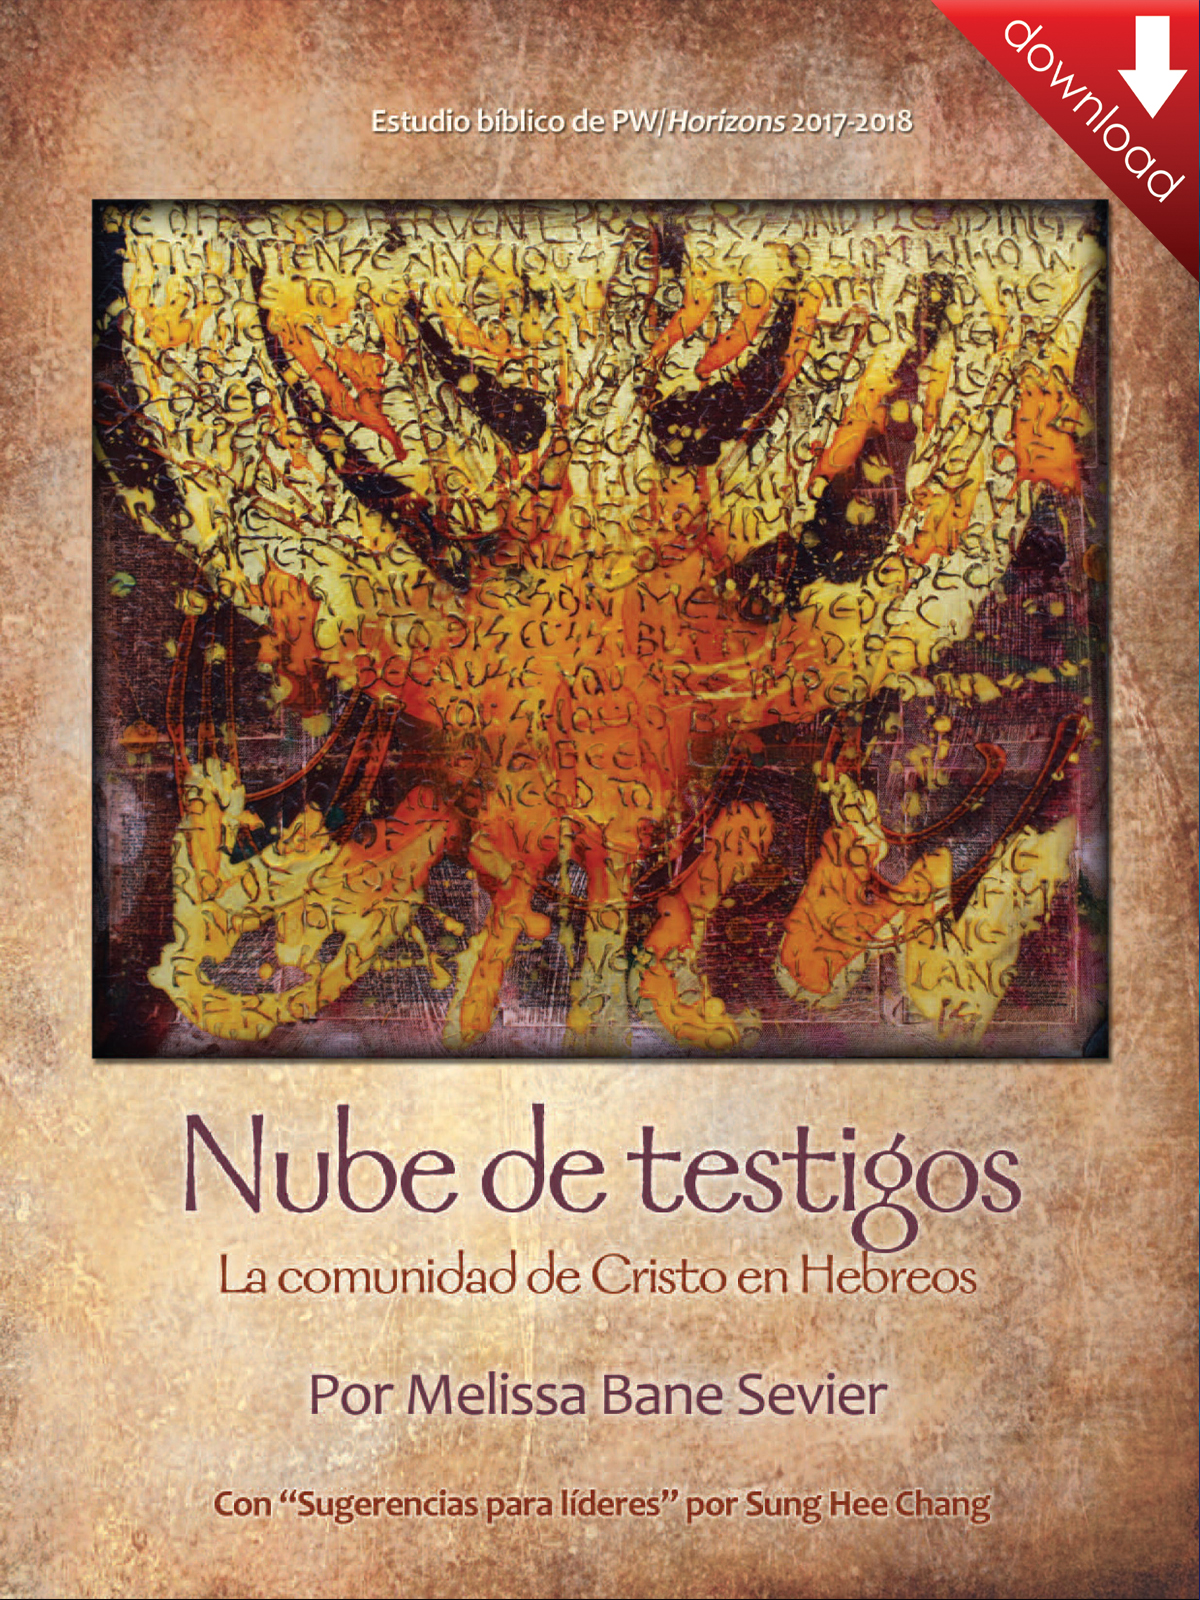 Stream ebook [read pdf] 📖 Las claves ocultas del 11M (Spanish Edition)  Read online by Suggswirfi